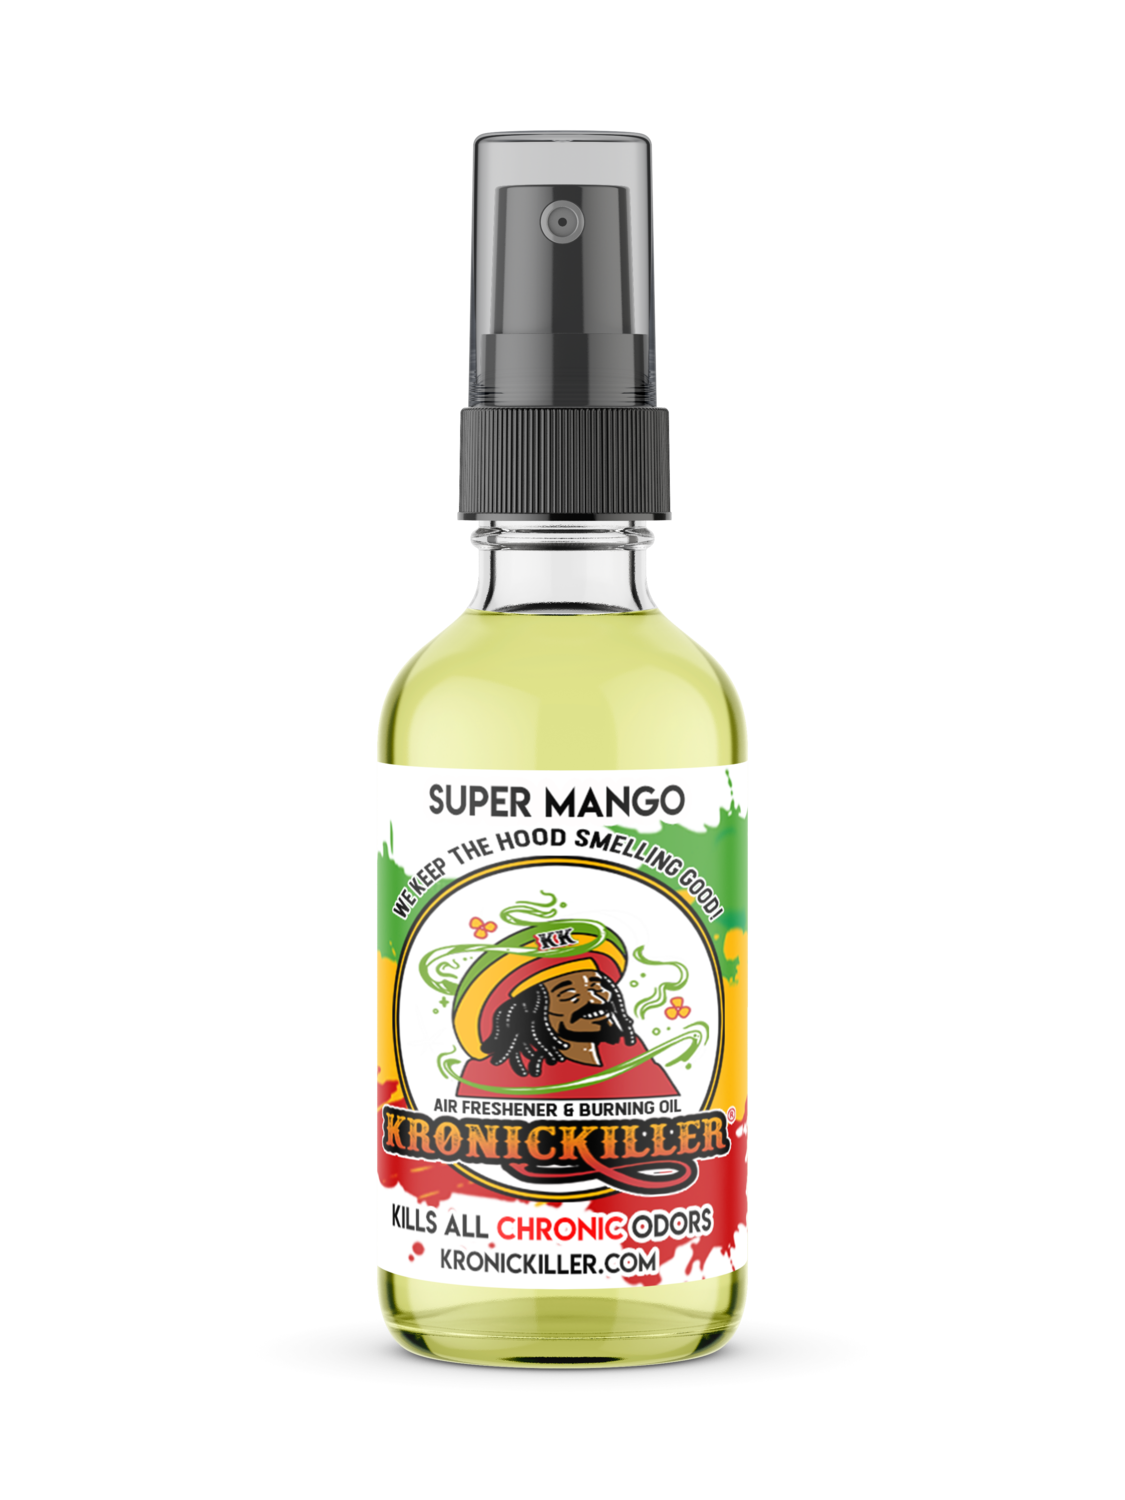 Super Mango Air Freshener & Burning Oil